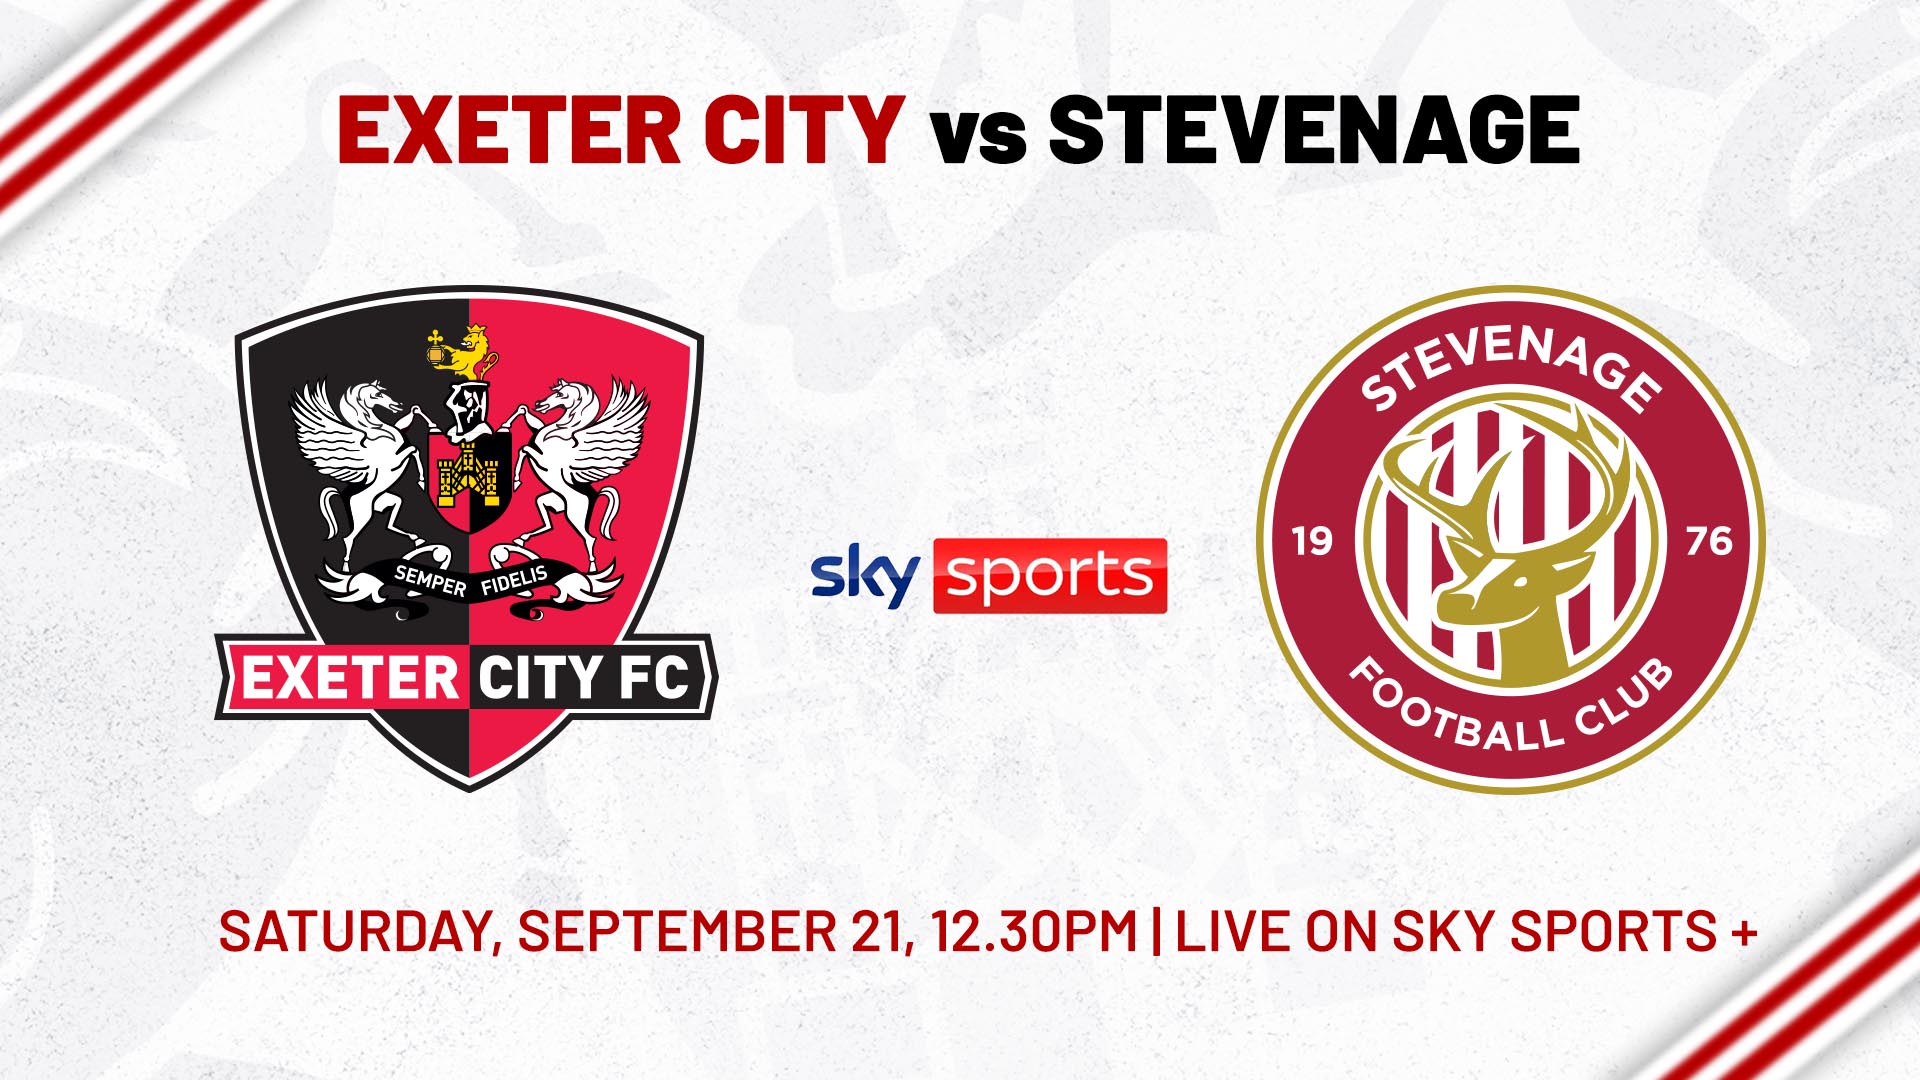 Exeter City vs Stevenage selected for SkySports+ tv coverage